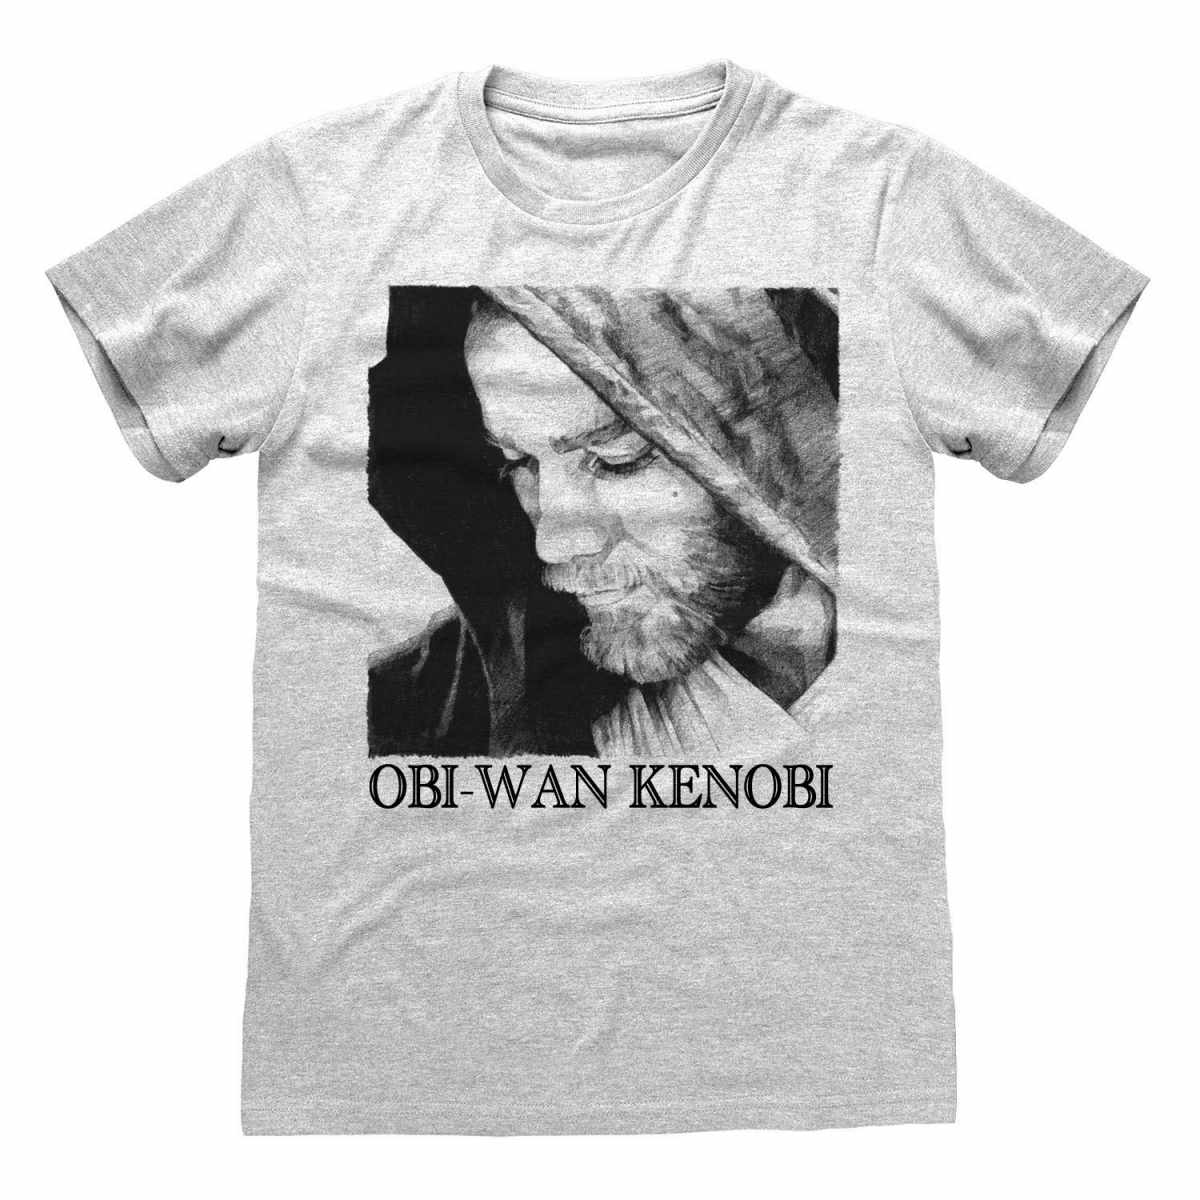 Star Wars Kenobi Profile T-Shirt